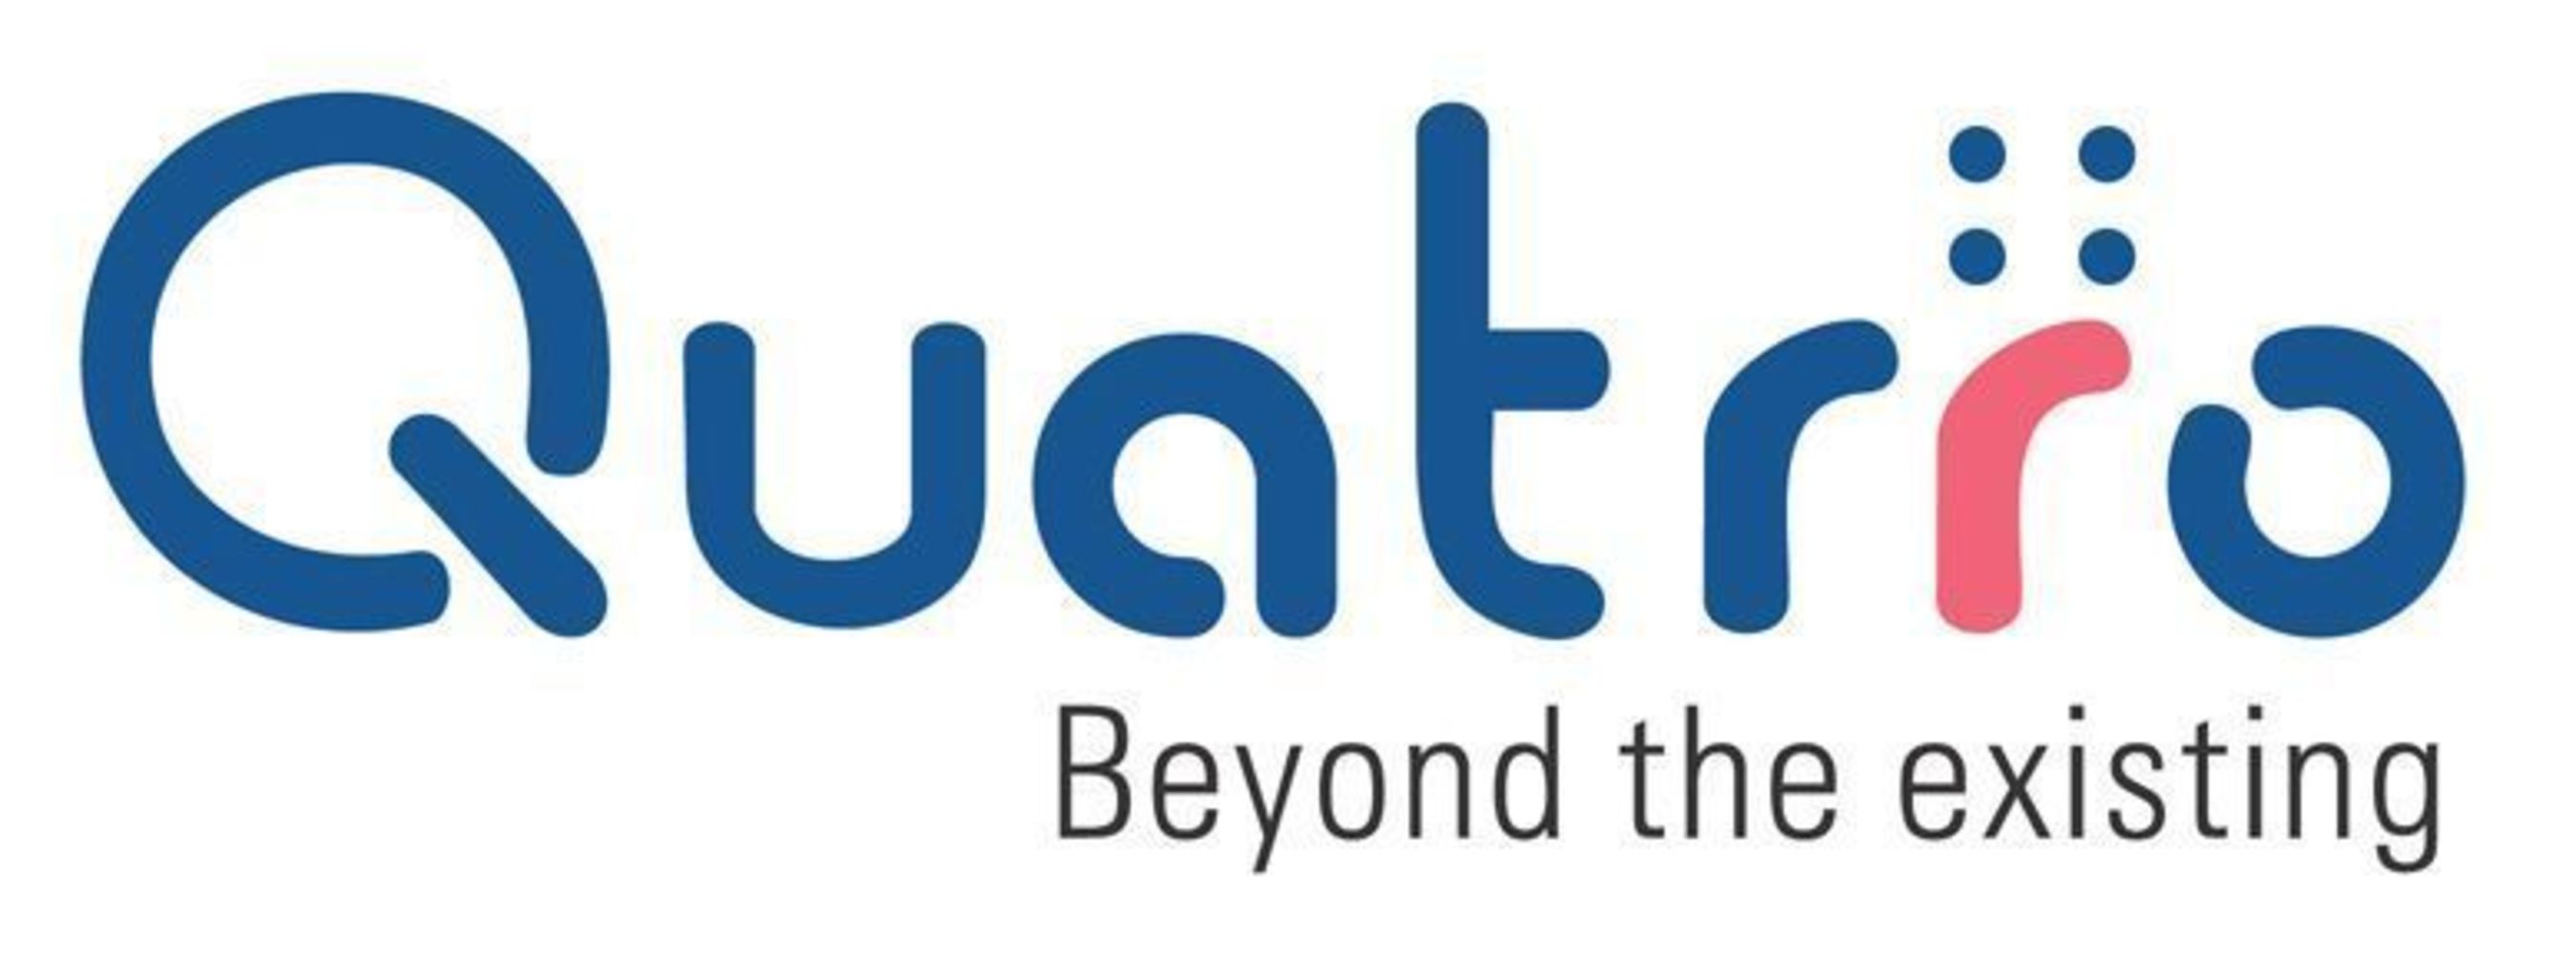 Logo (PRNewsFoto/Quatrro Global Services)